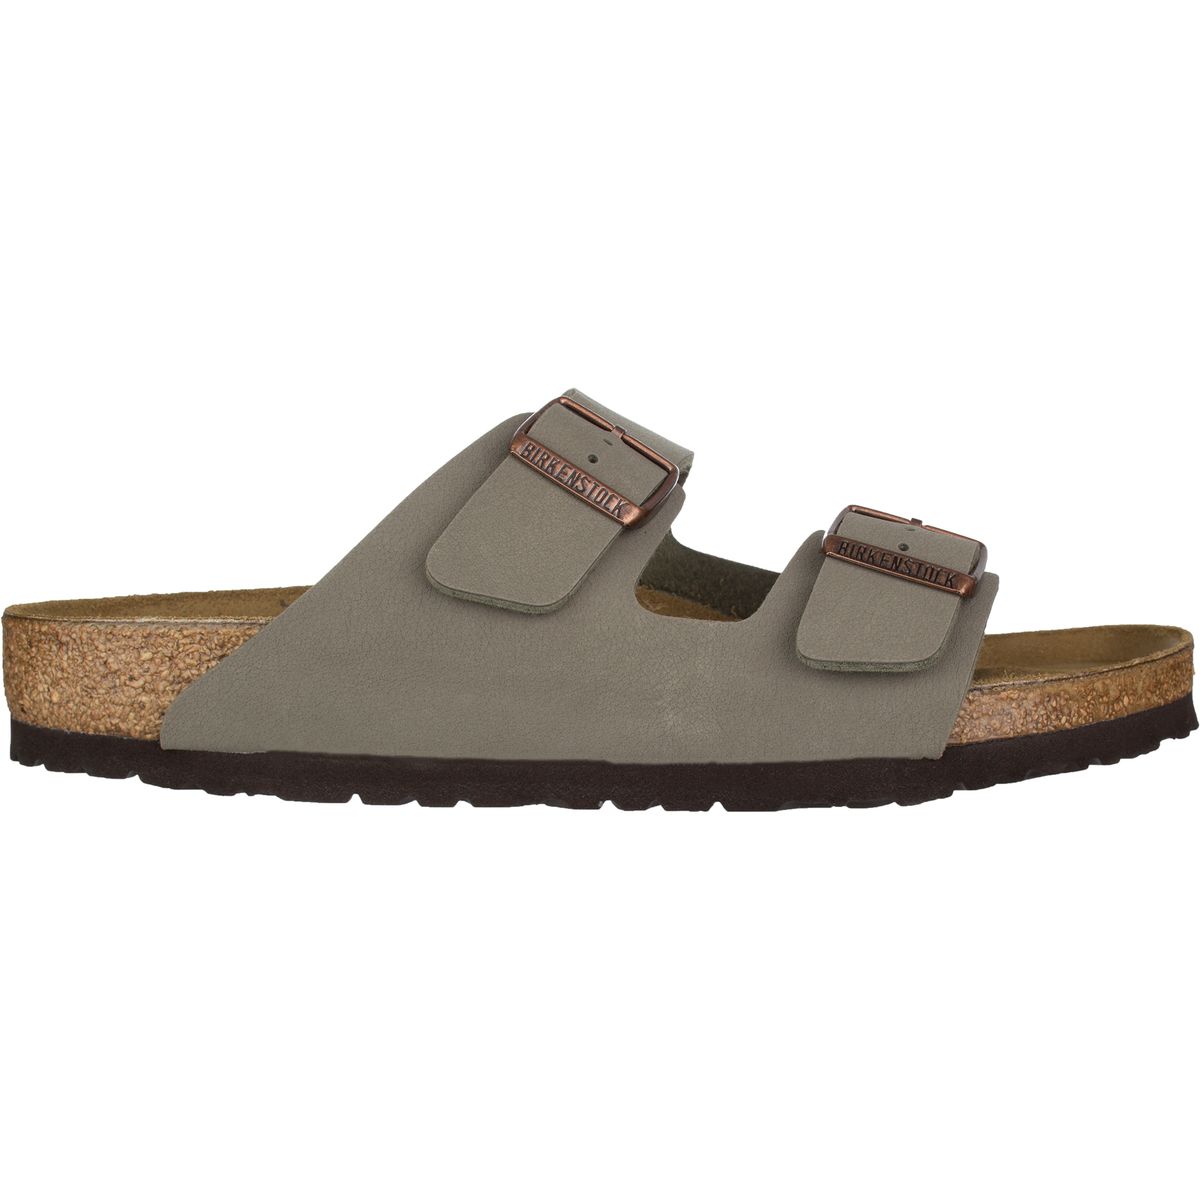 Birkenstock Arizona Sandal - Men's - Footwear